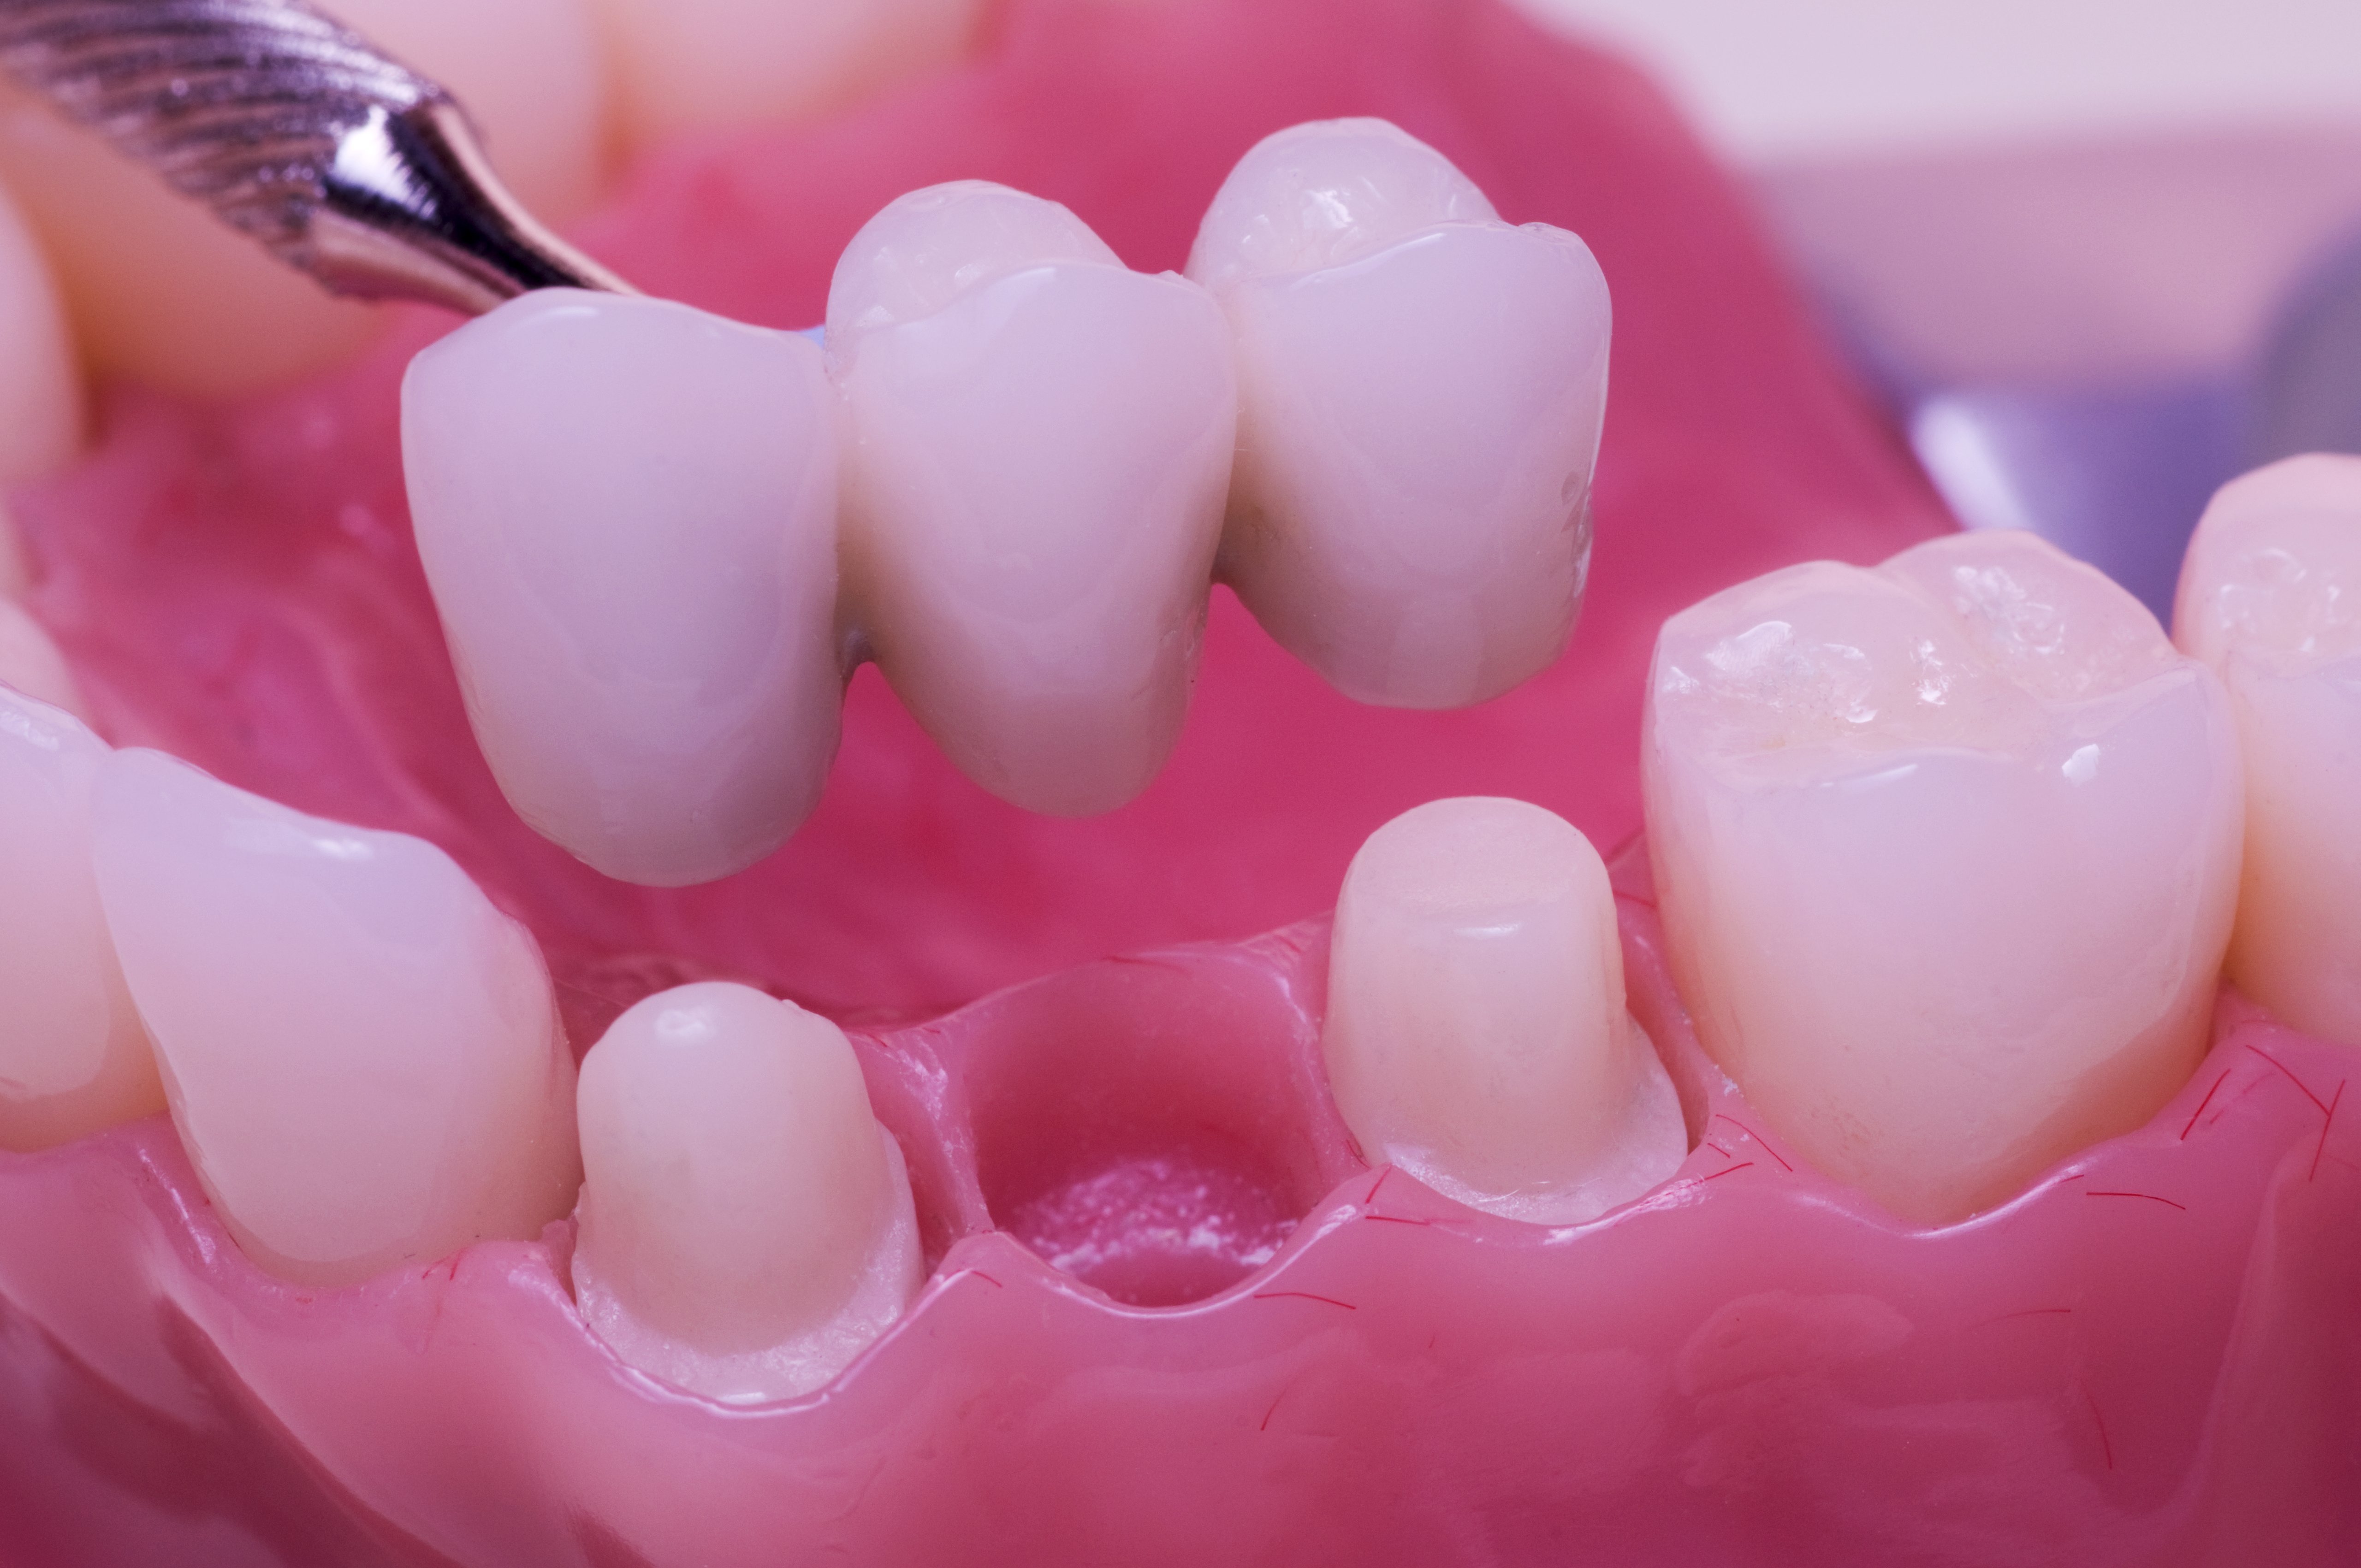 Dental Bridge Procedure